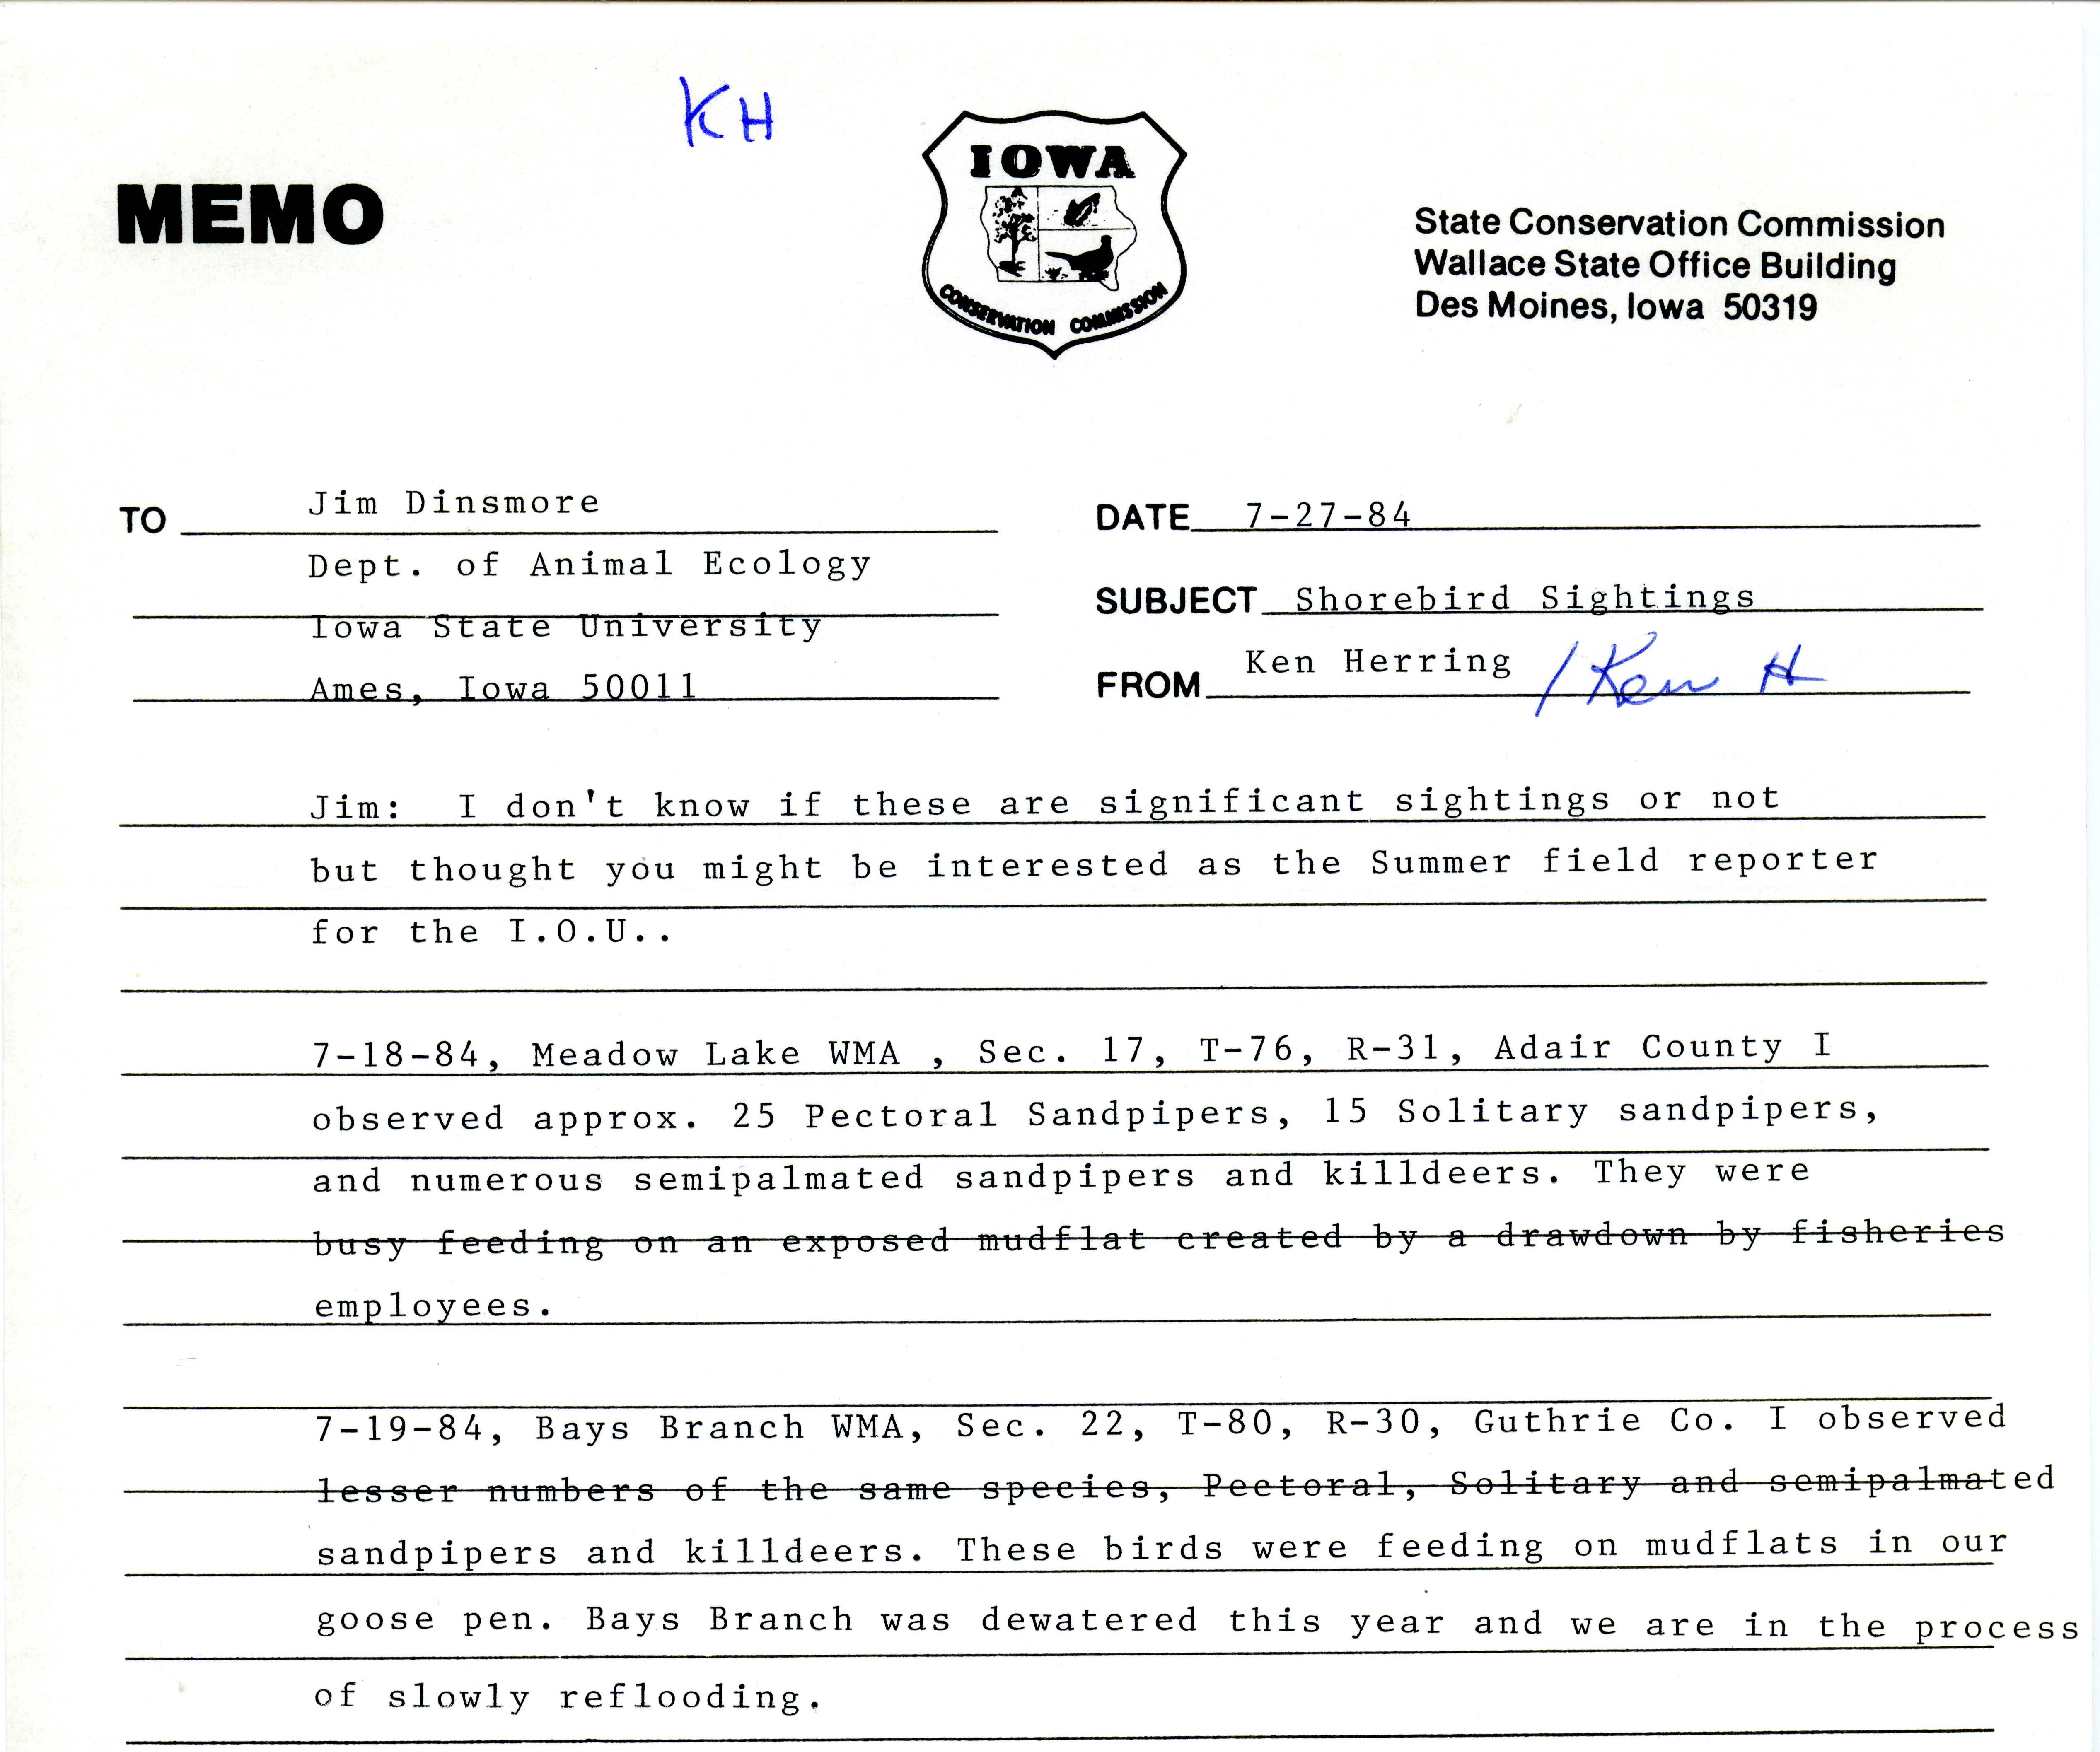 Ken Herring memo to James J. Dinsmore regarding shorebird sightings, July 27, 1984